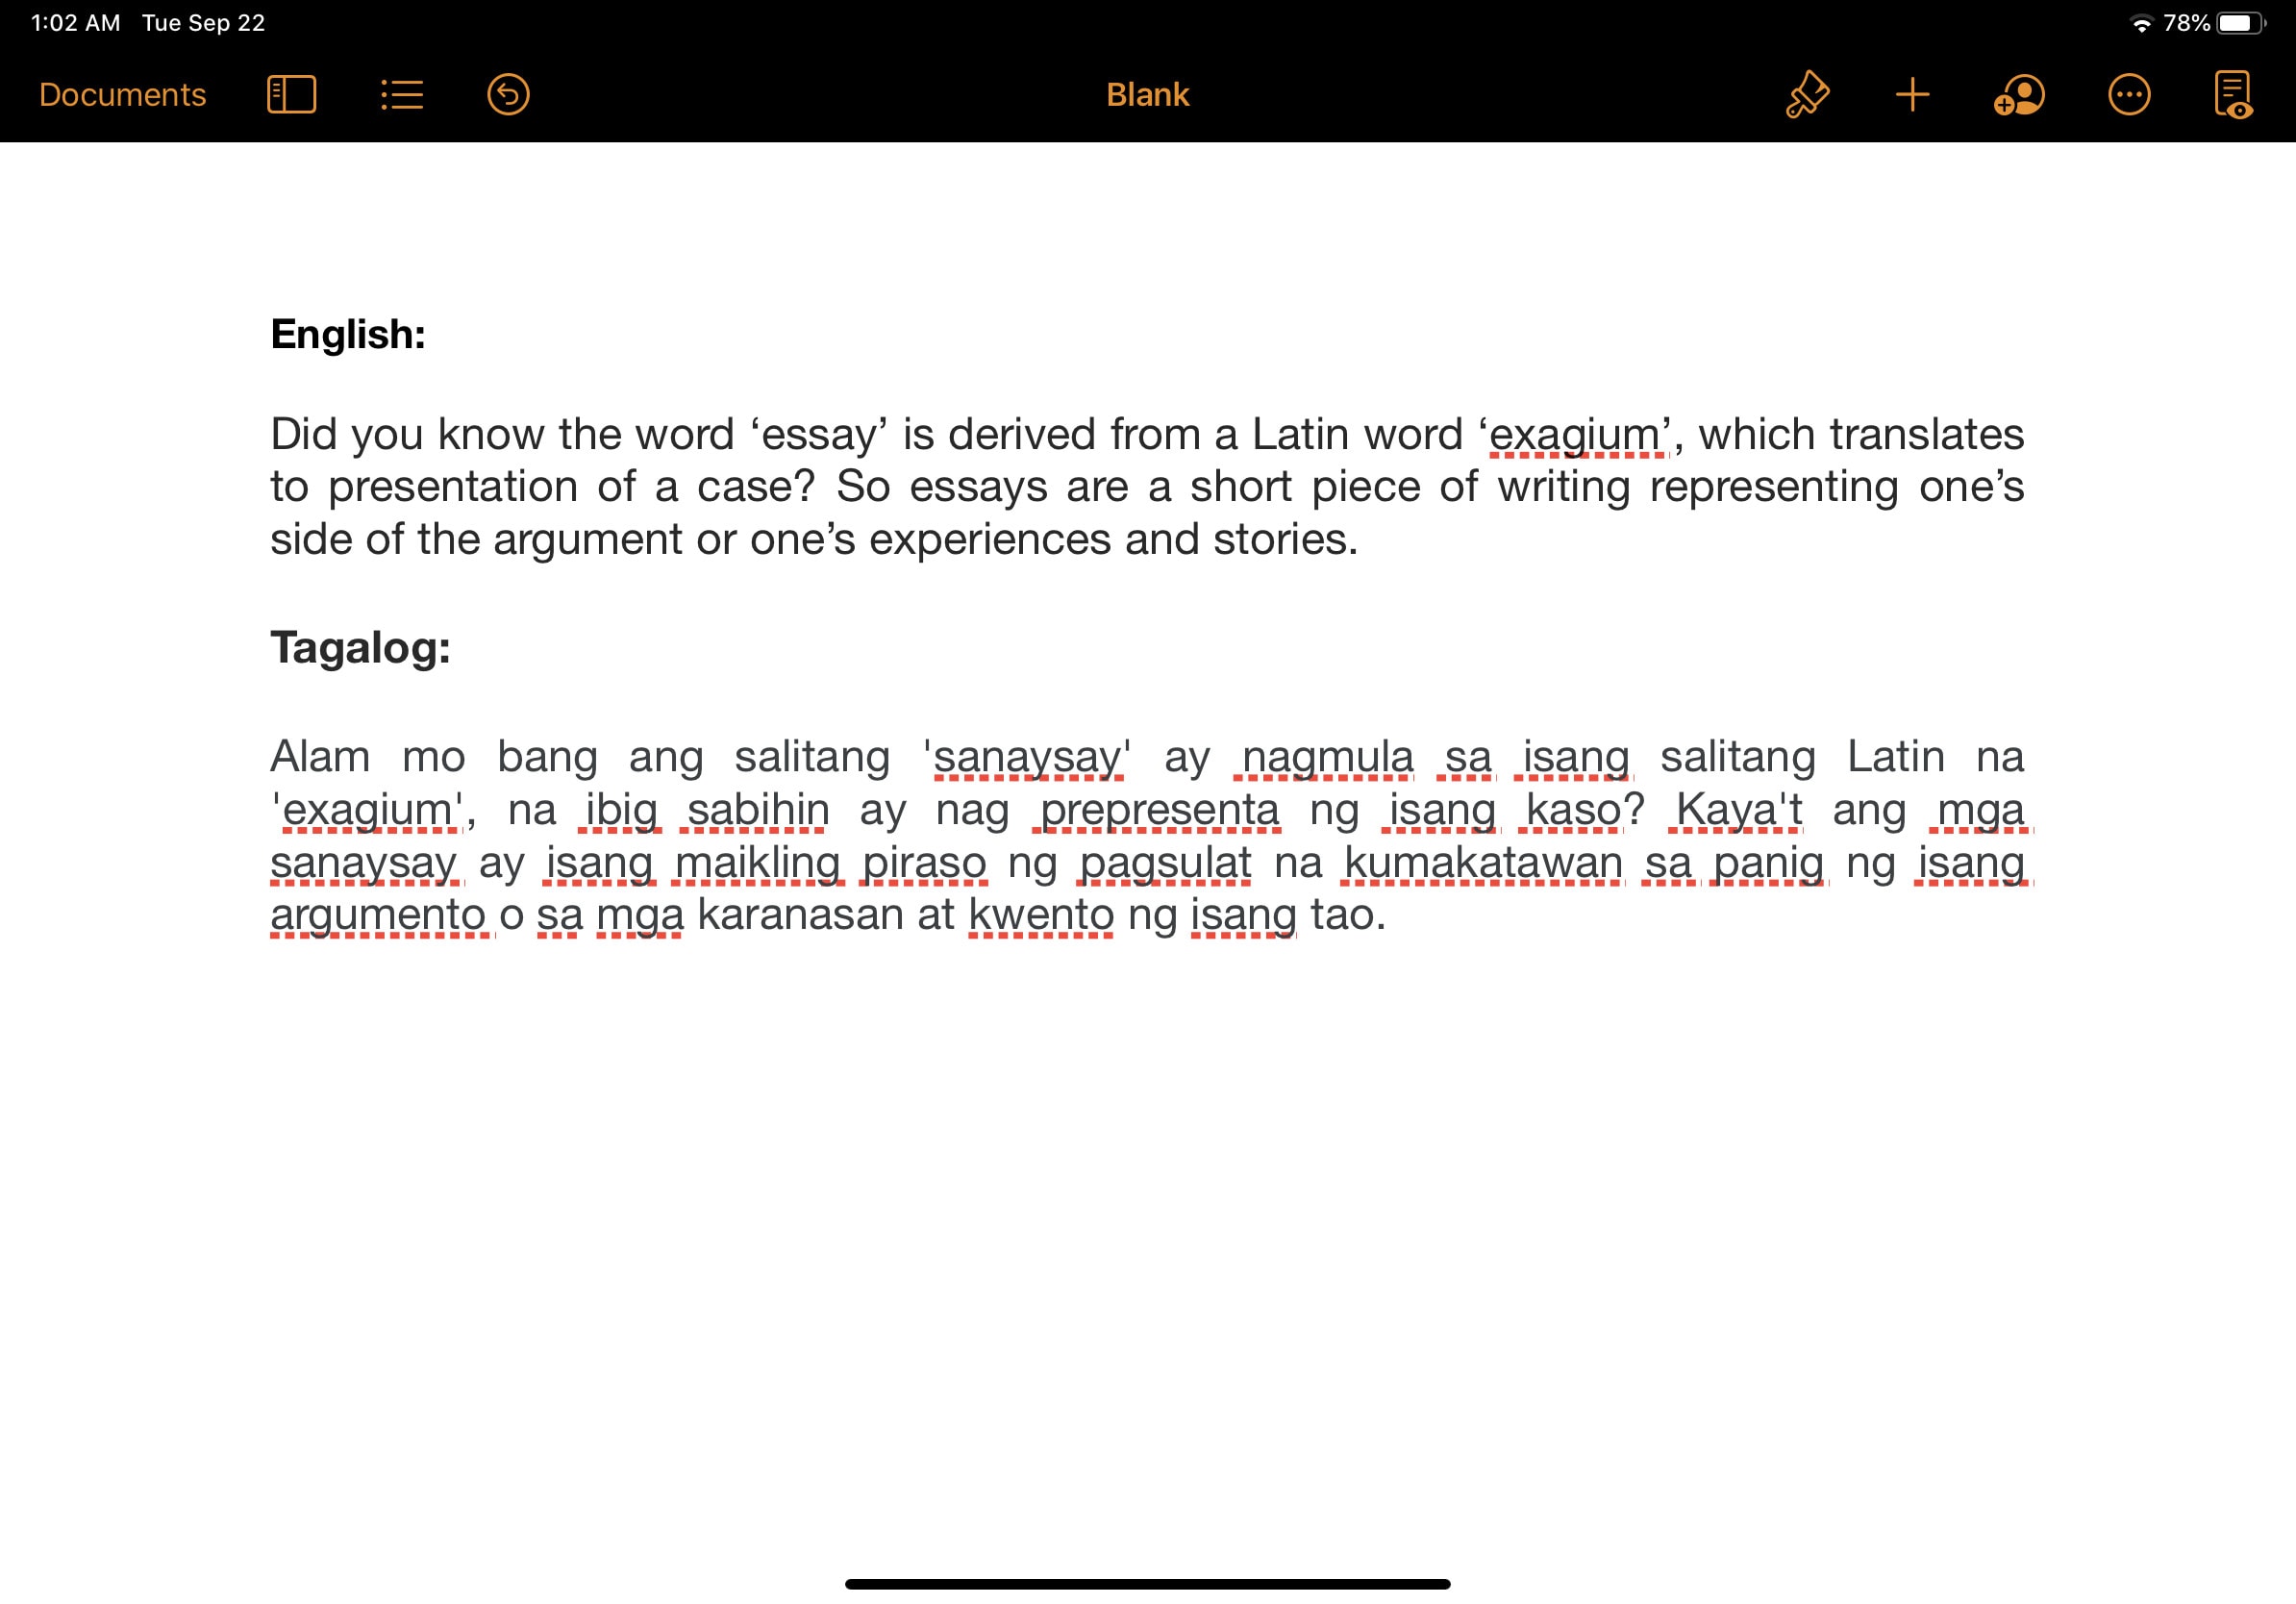 Translation tagalog grammar to english FREE Tagalog